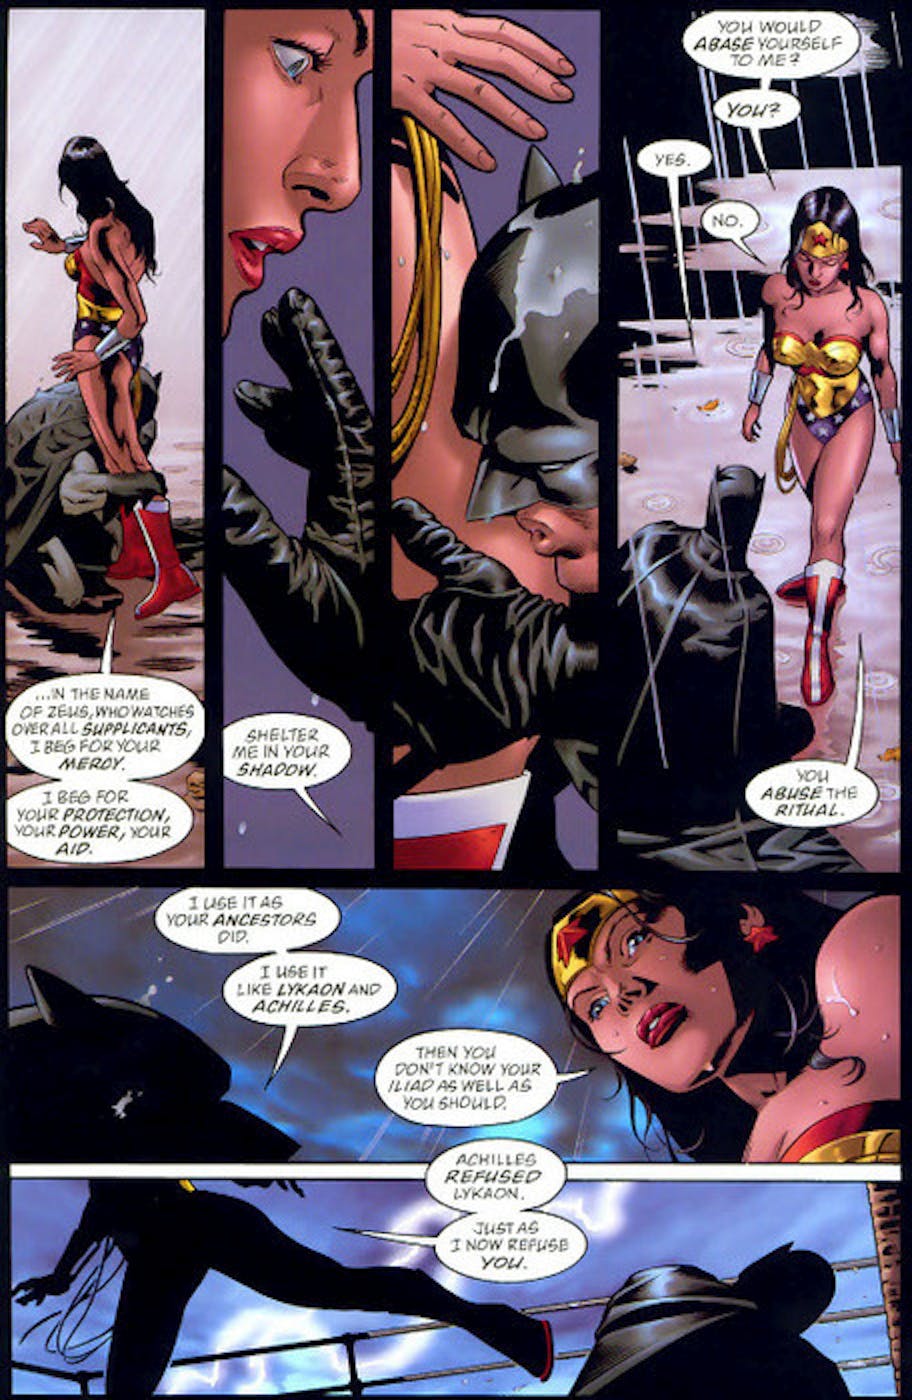 Wonder Woman Lesbian Sex Comics - The Sexiest Scenes in Contemporary Comic Books | Inverse